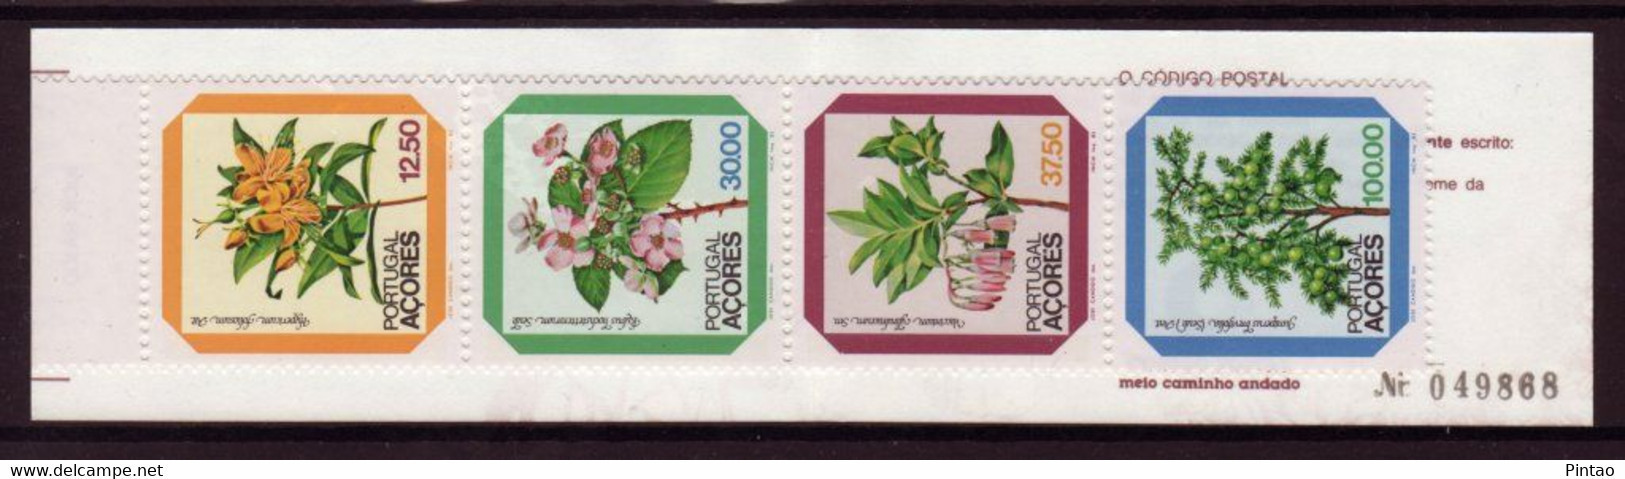 Portugal 1983- Caderneta 28 -  MNH_ PTC005 - Carnets